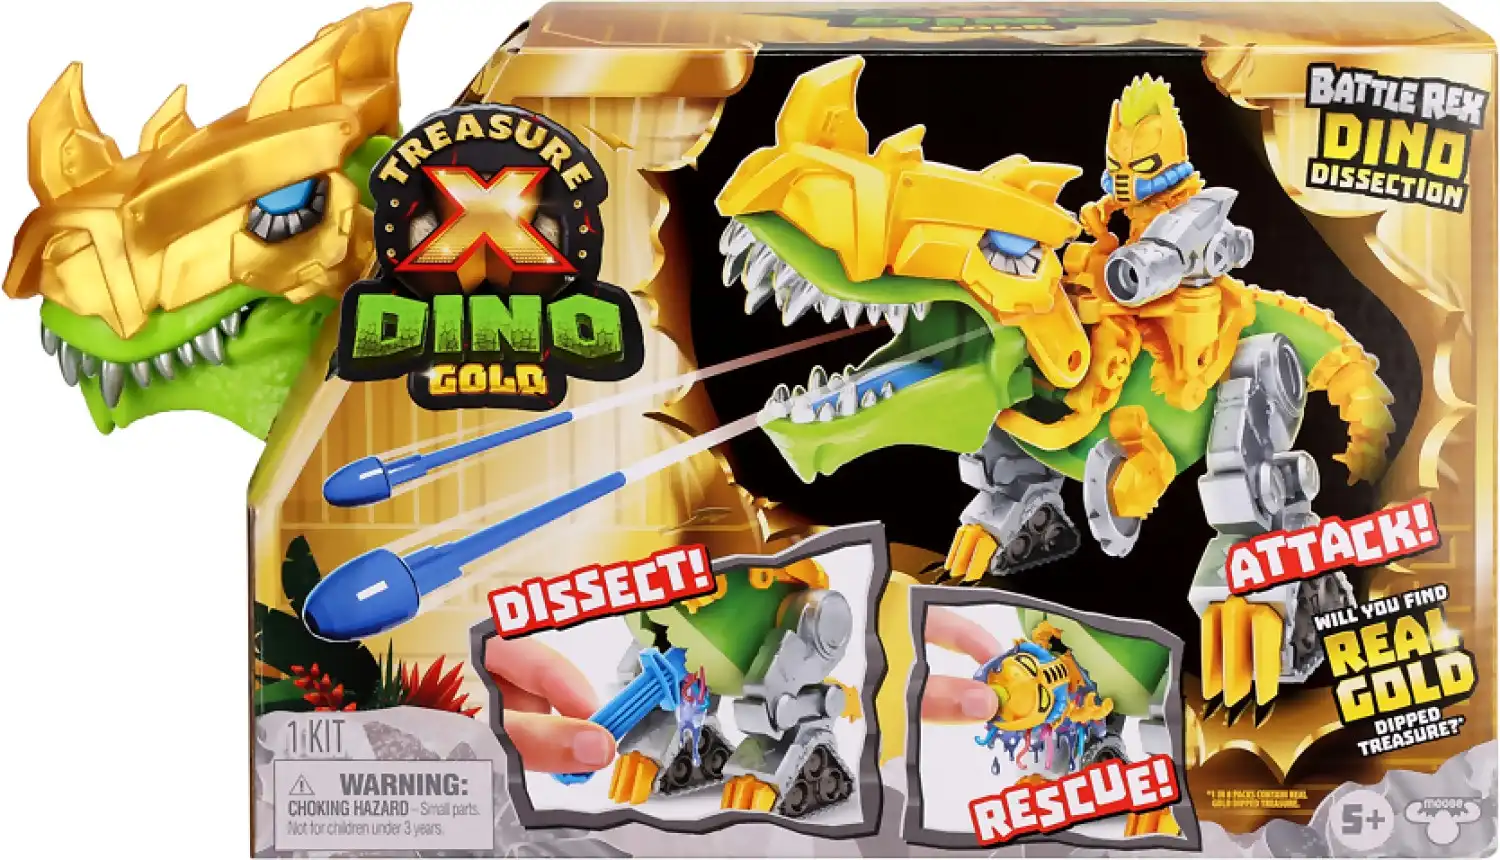 Treasure X - Dino Gold S5 Battle Rex Dino Dissection